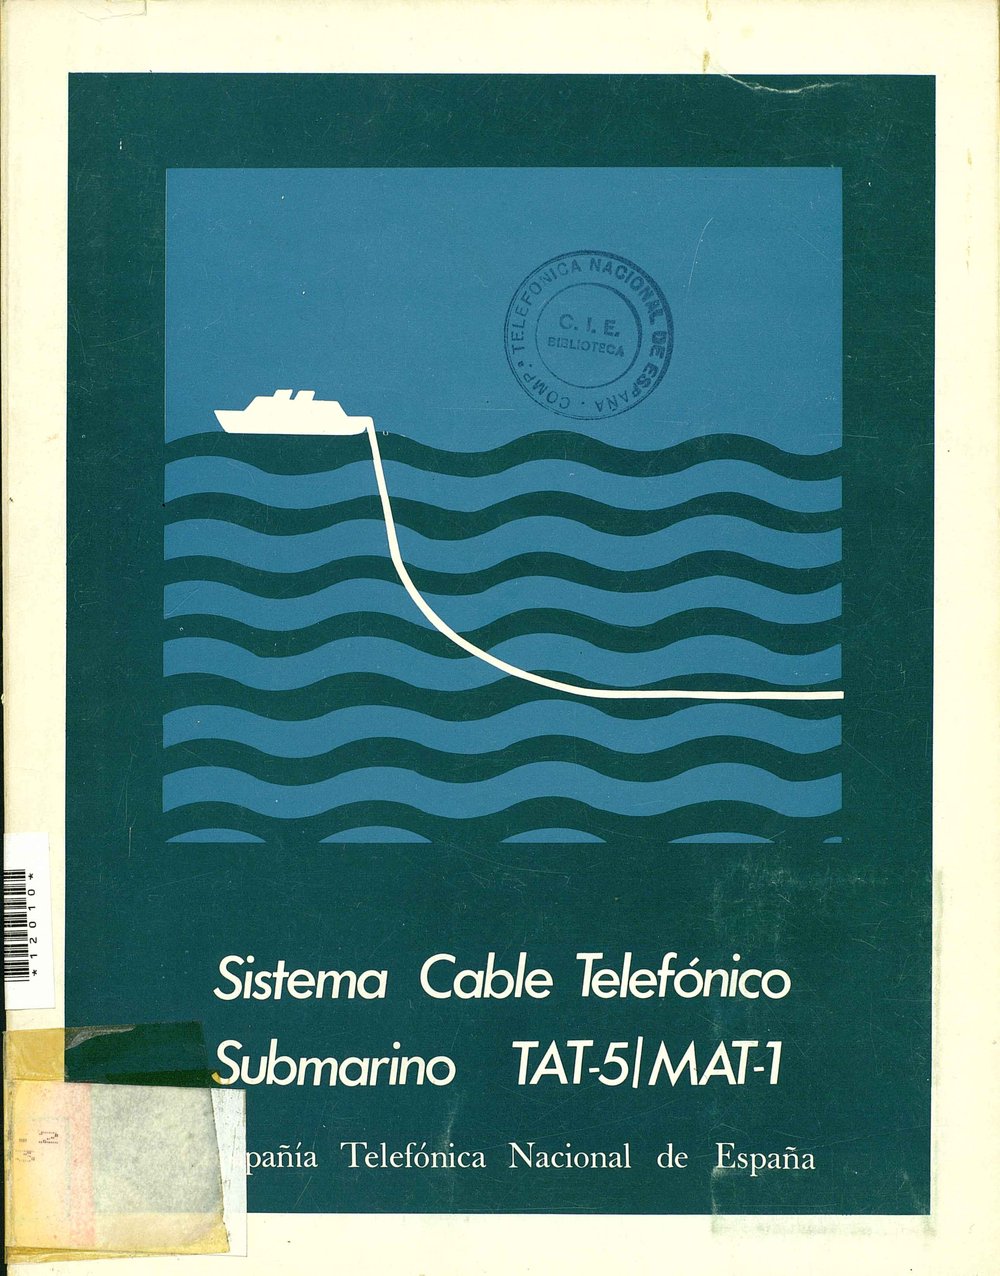 TAT-5/MAT-1 SUBMARINE TELEPHONE CABLE SYSTEM